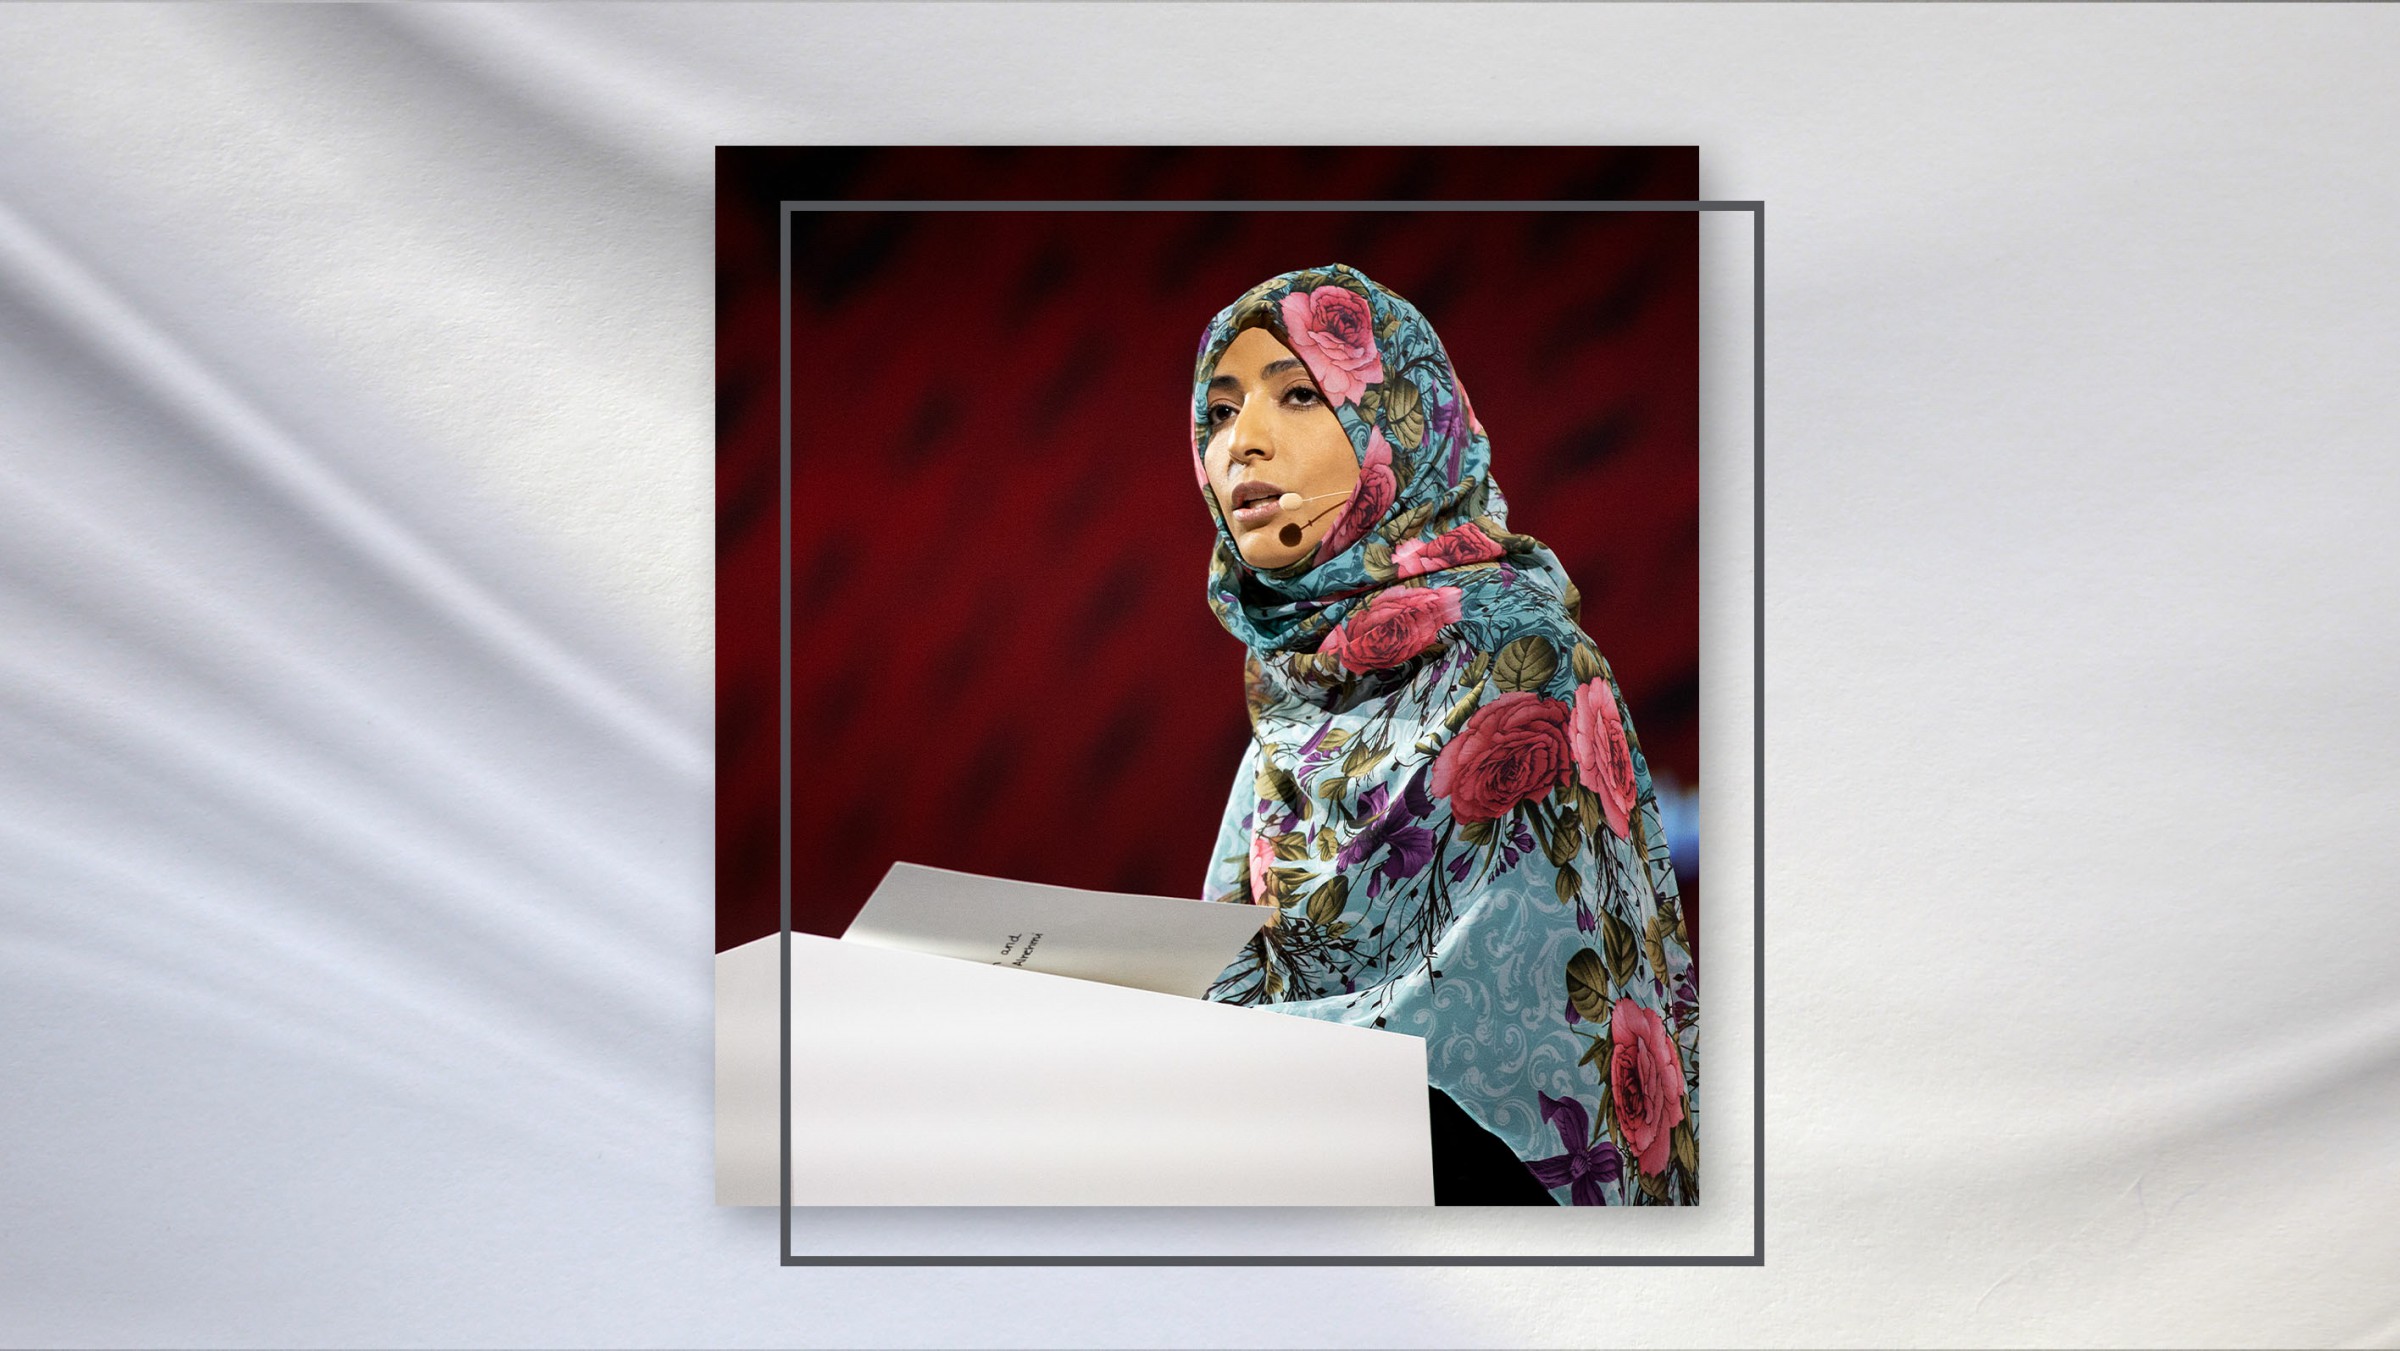 Speech by Mrs. Tawakkol Karman at Peace Prize Forum 2019 - Oslo